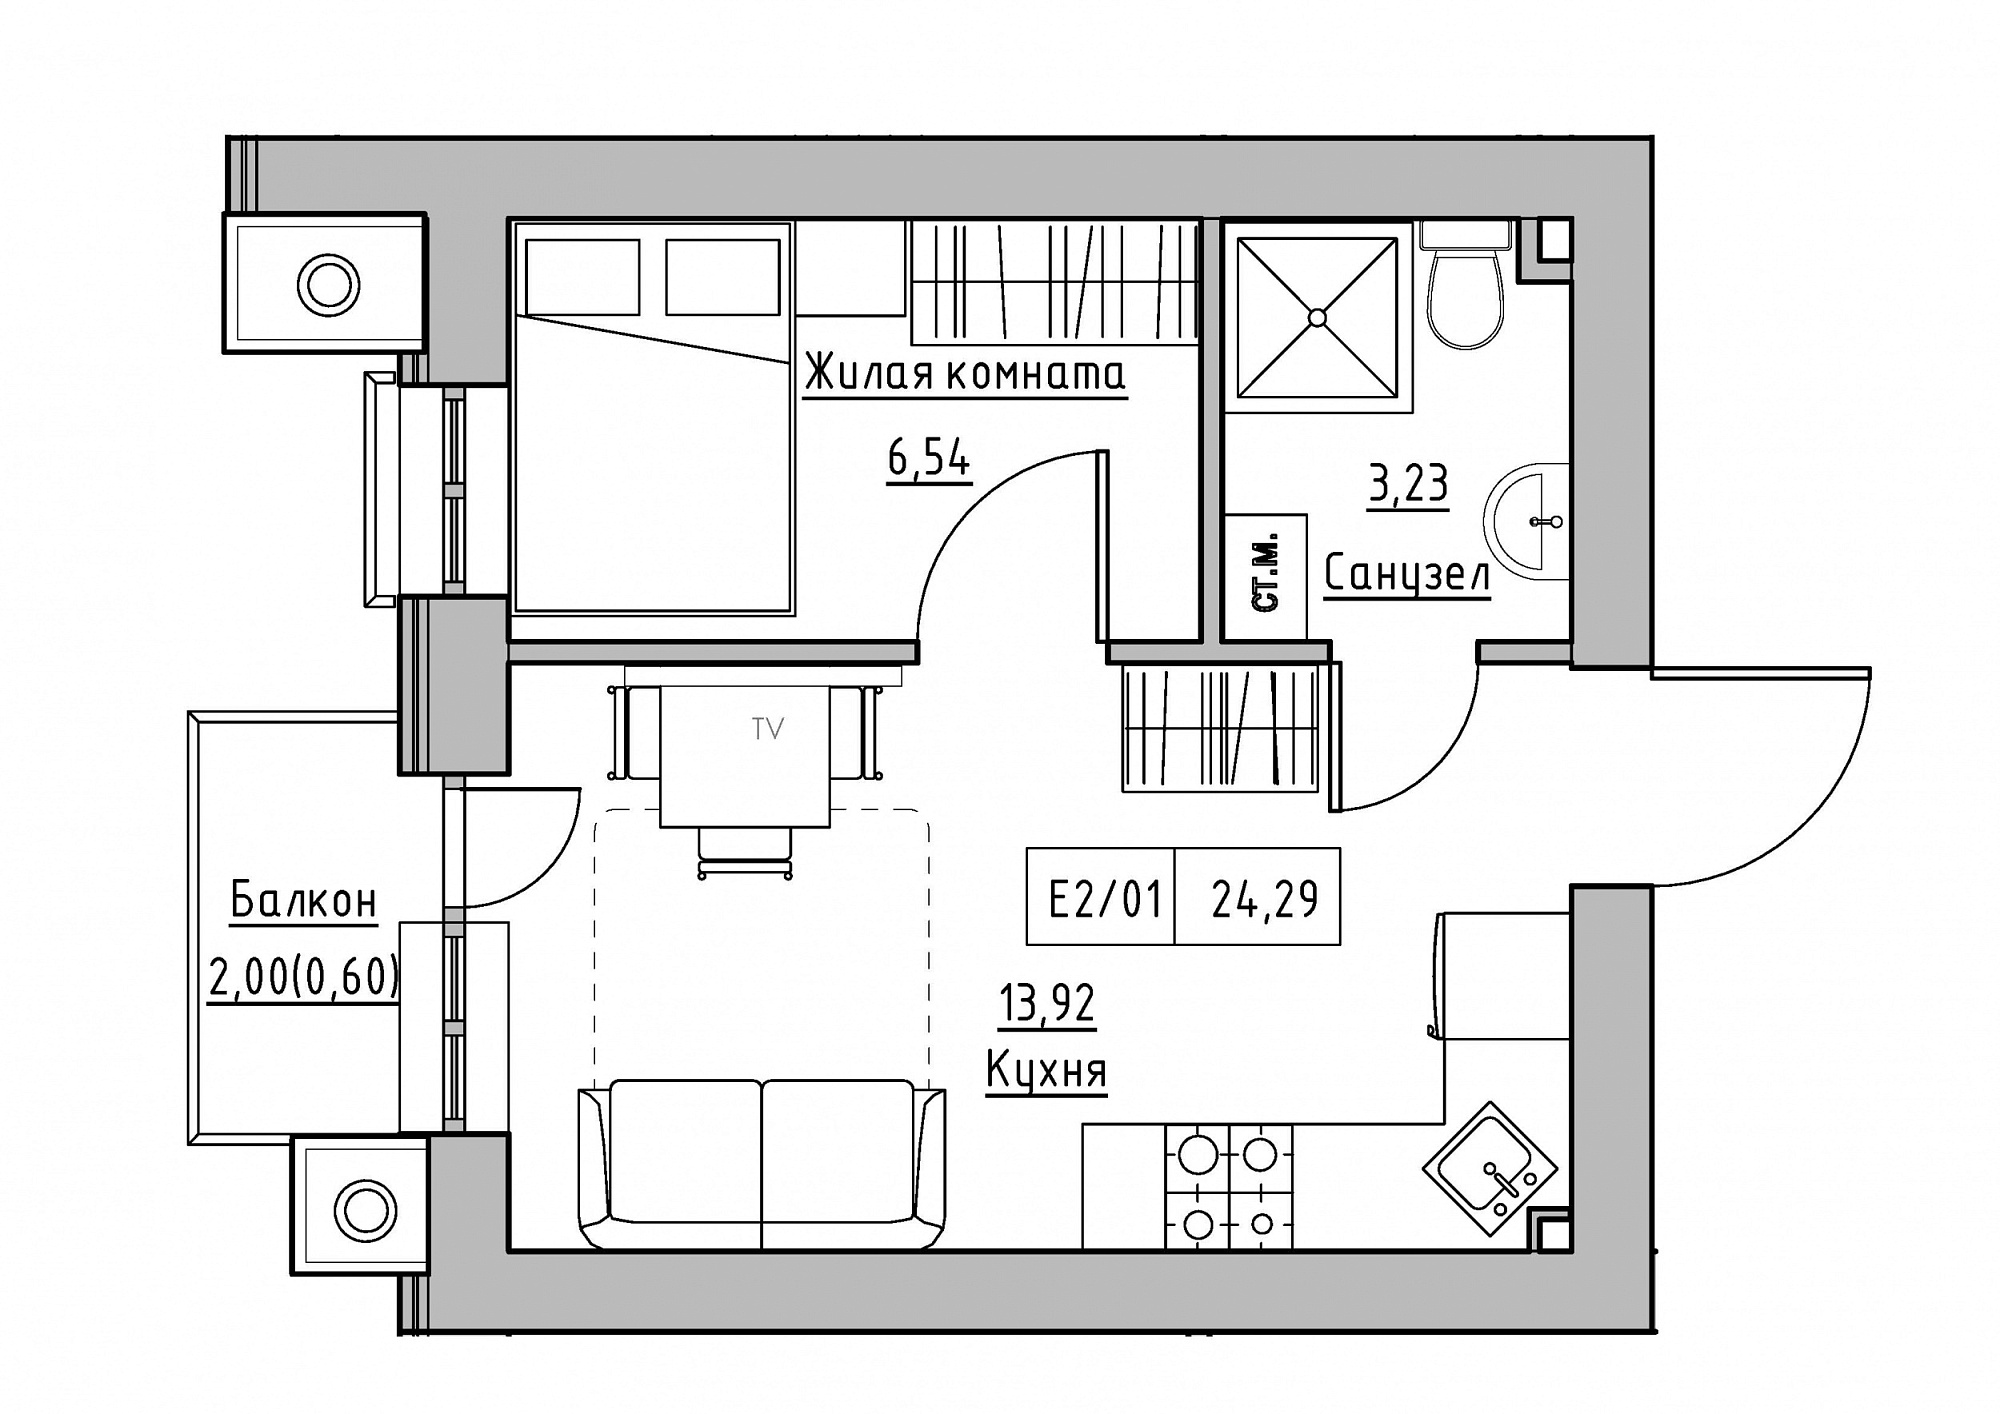 Planning 1-rm flats area 24.29m2, KS-012-03/0009.